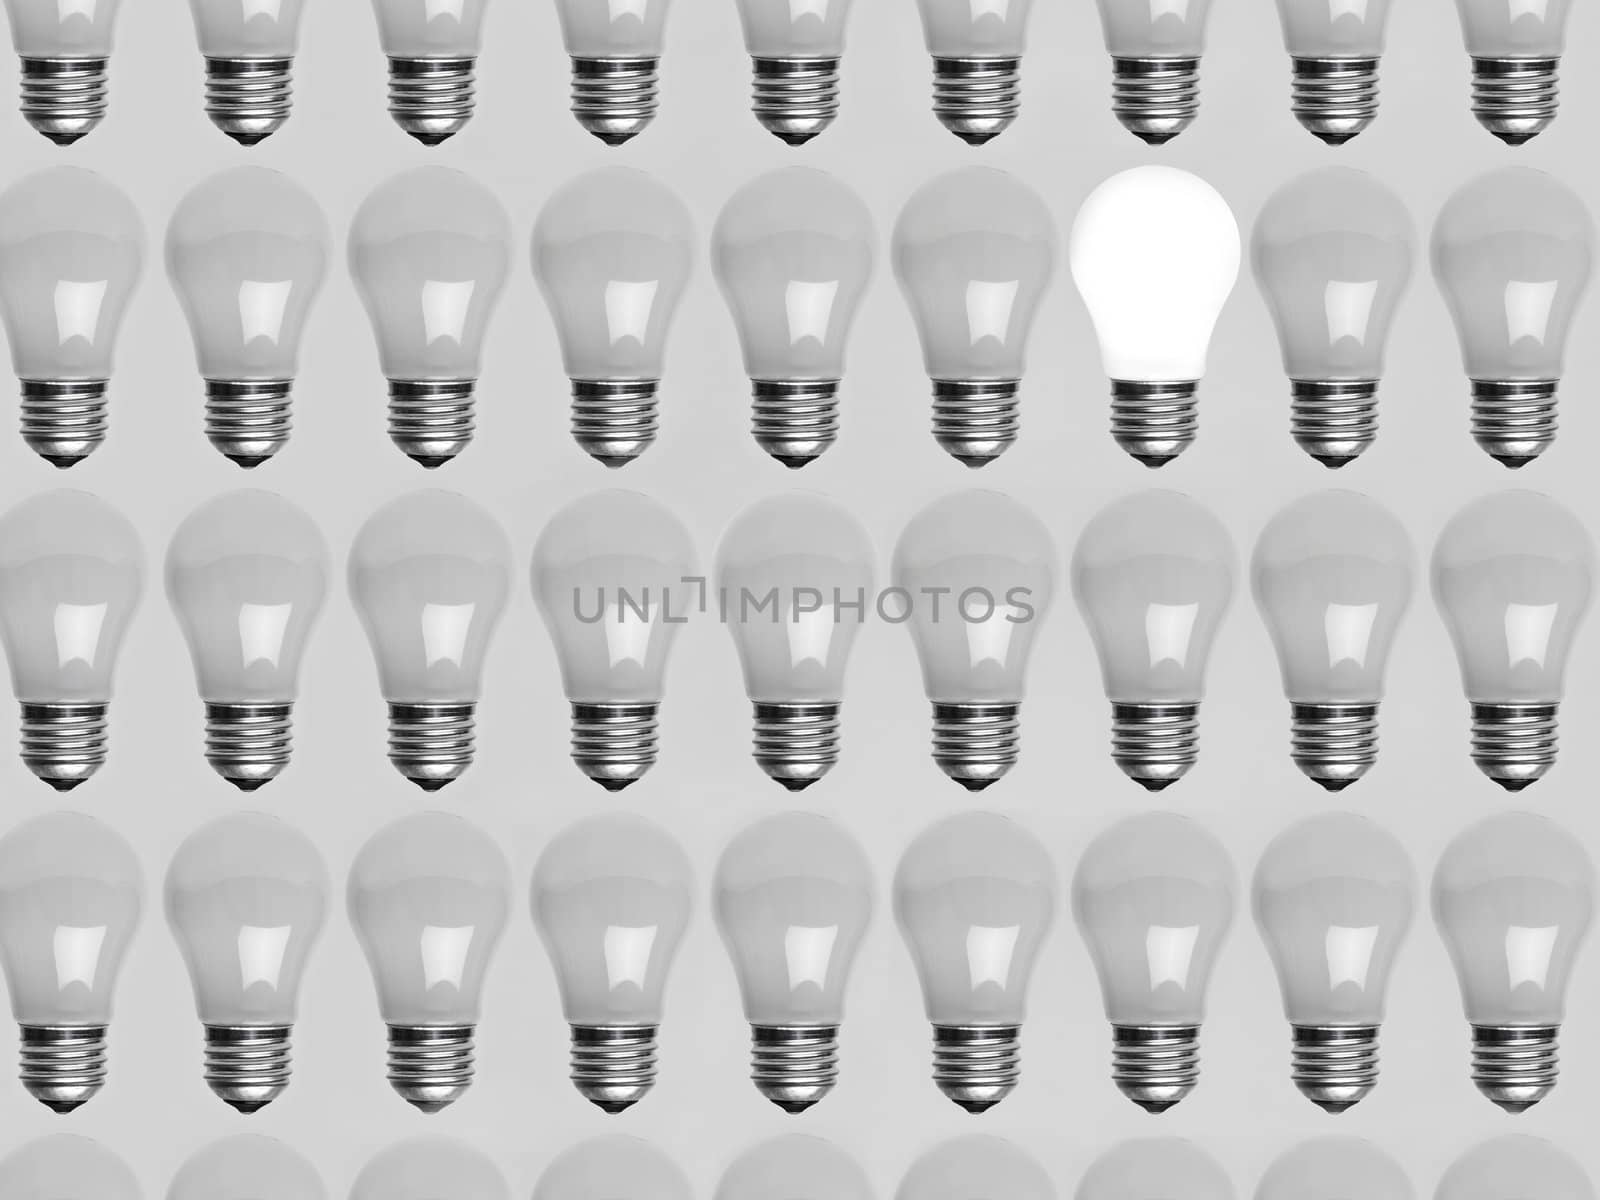 Collage of light bulbs